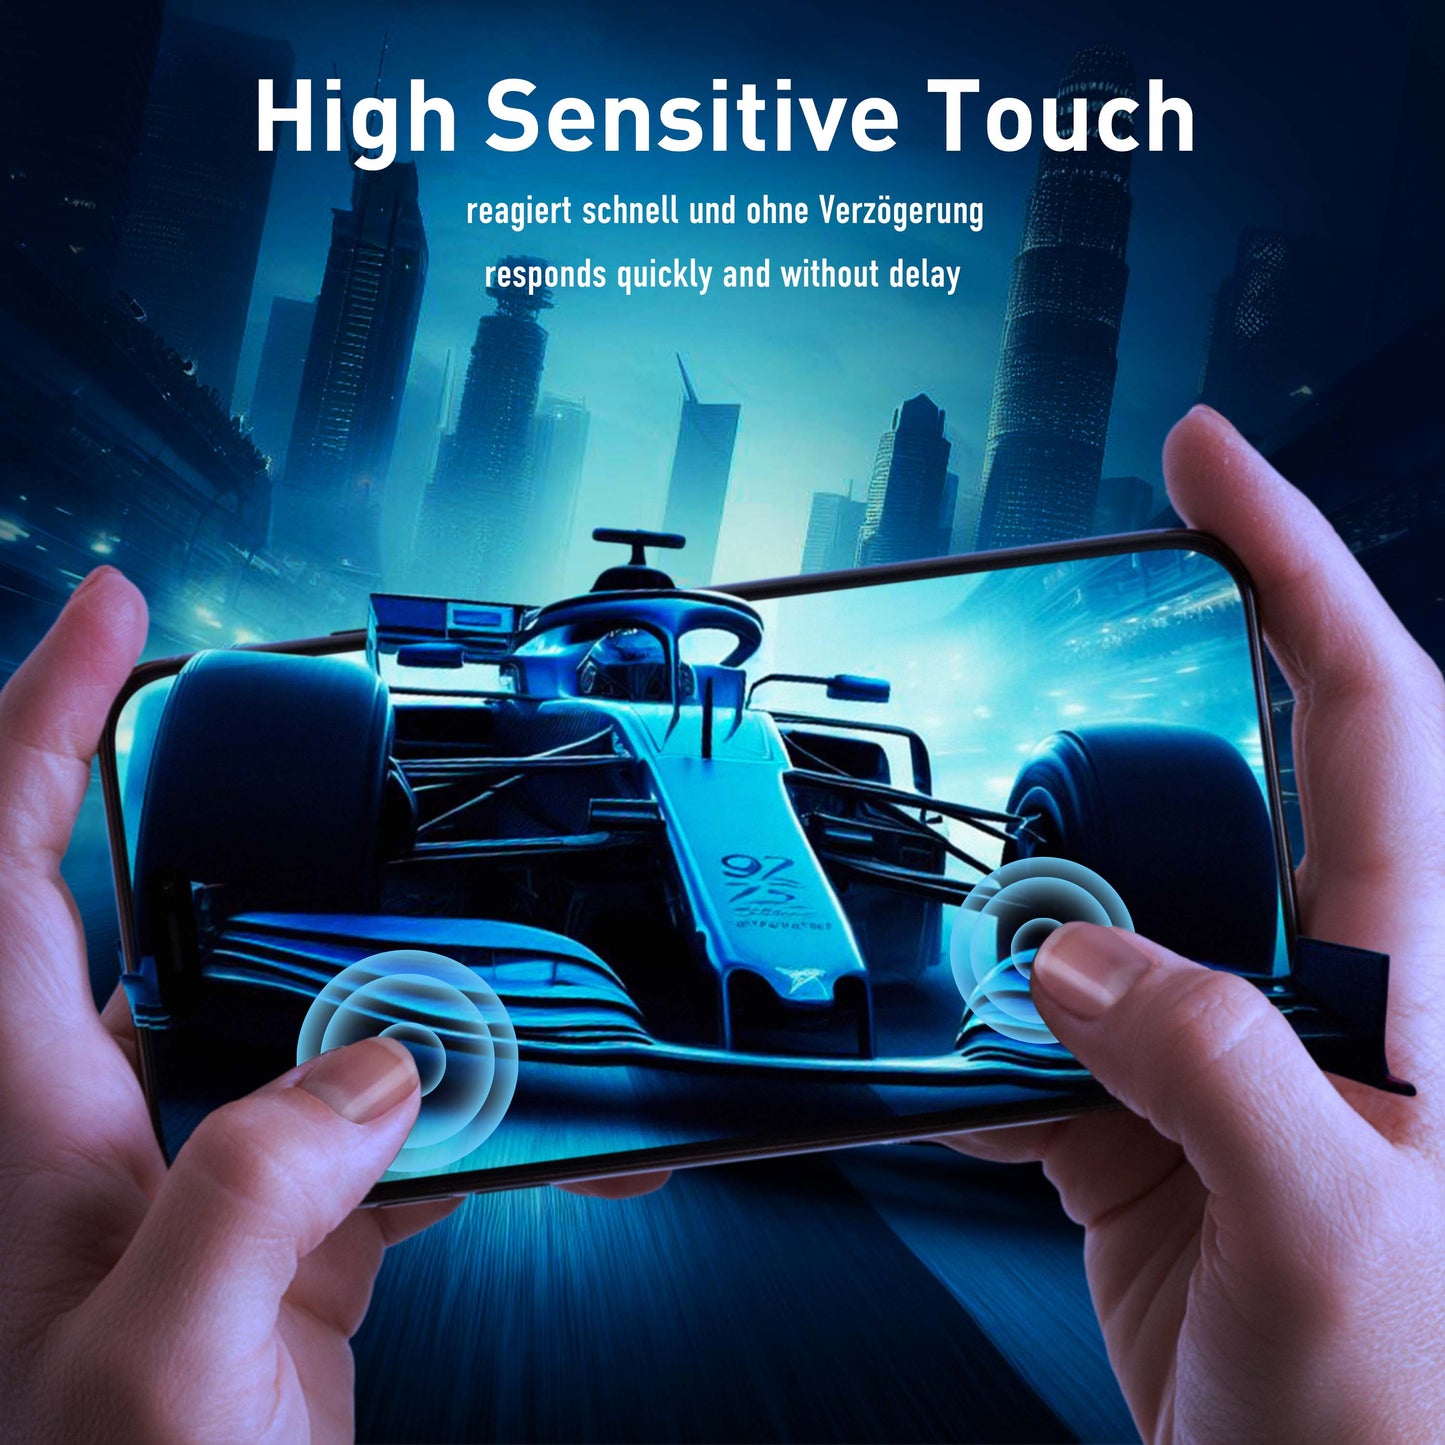 smartect Schutzglas Klar für Samsung Galaxy A52 4G / A52 5G / A52s 5G, 3 Stück